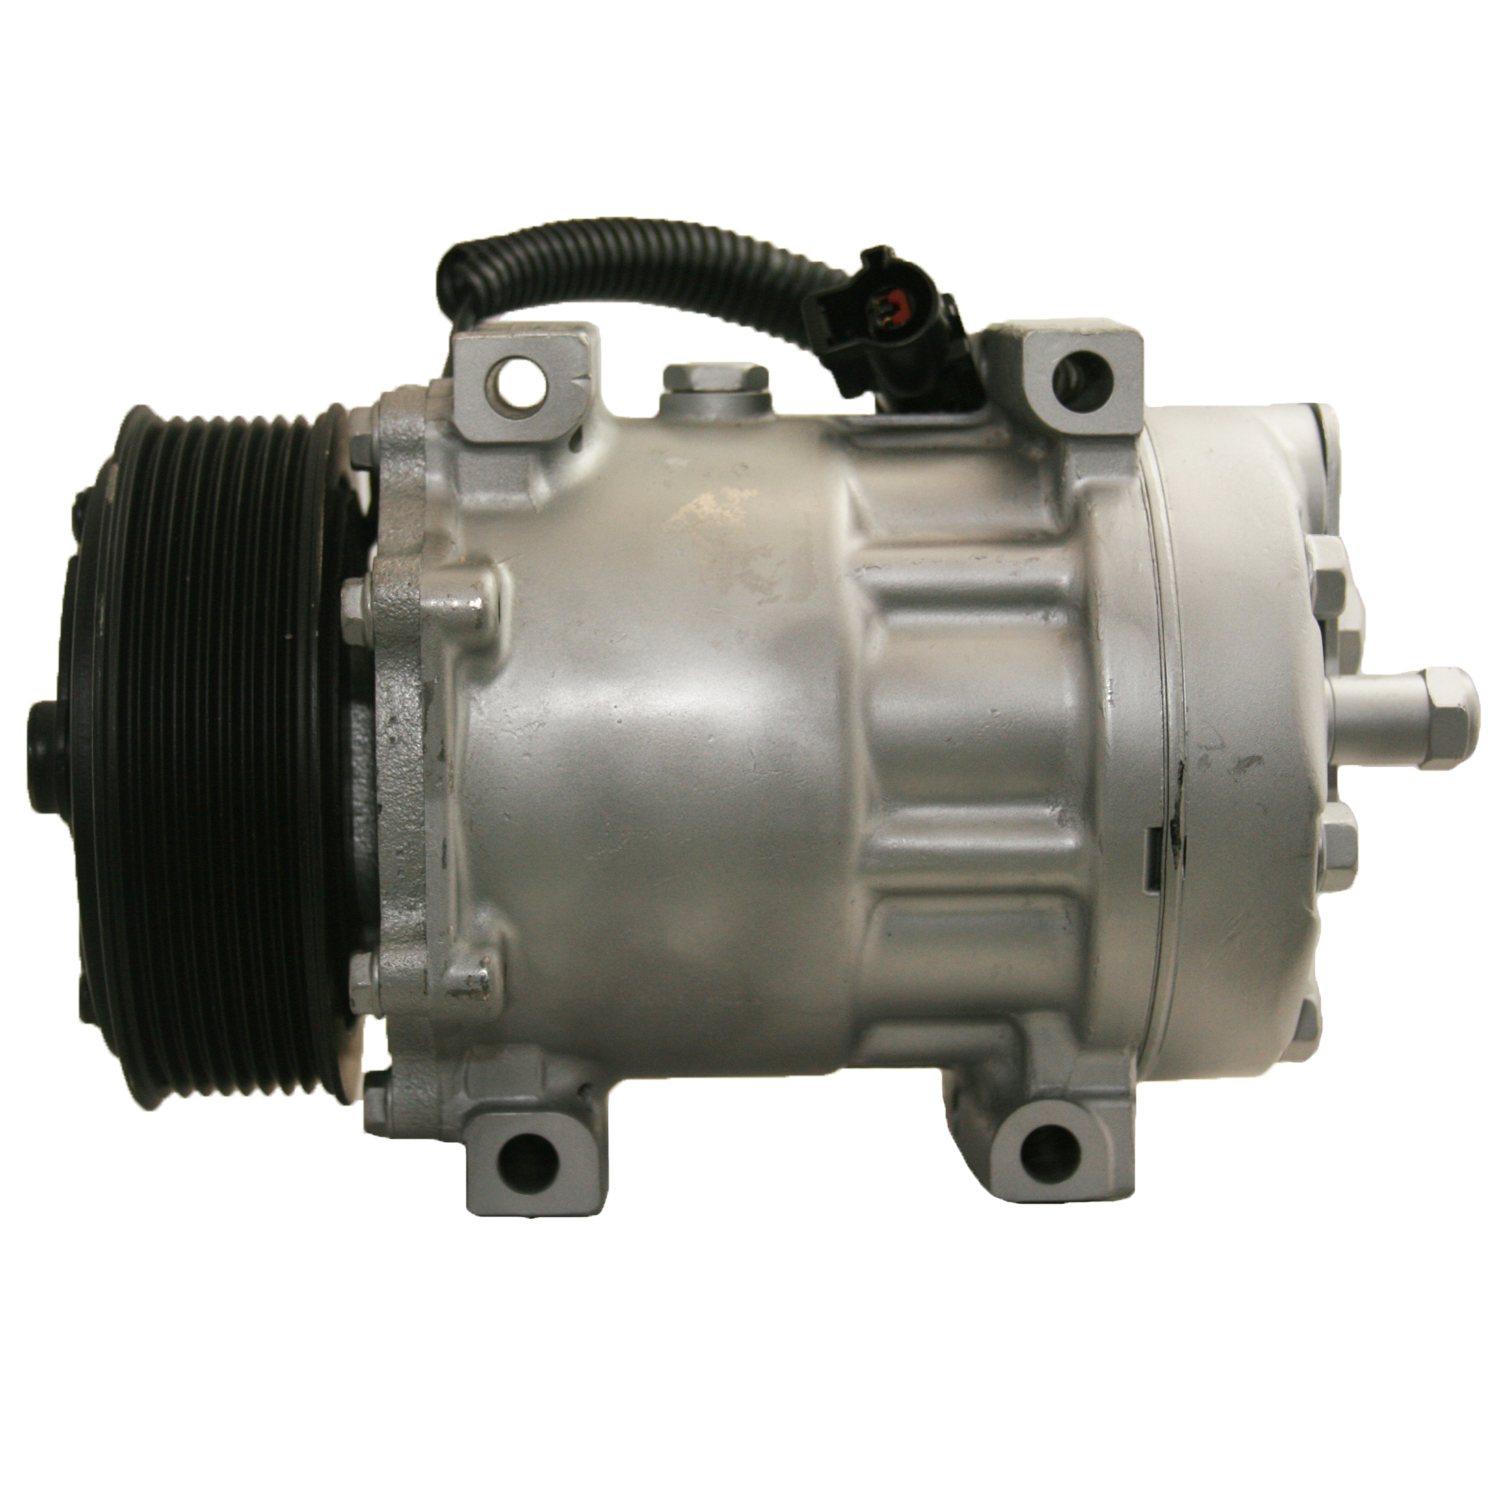 TCW Compressor 40572.801 Remanufactured